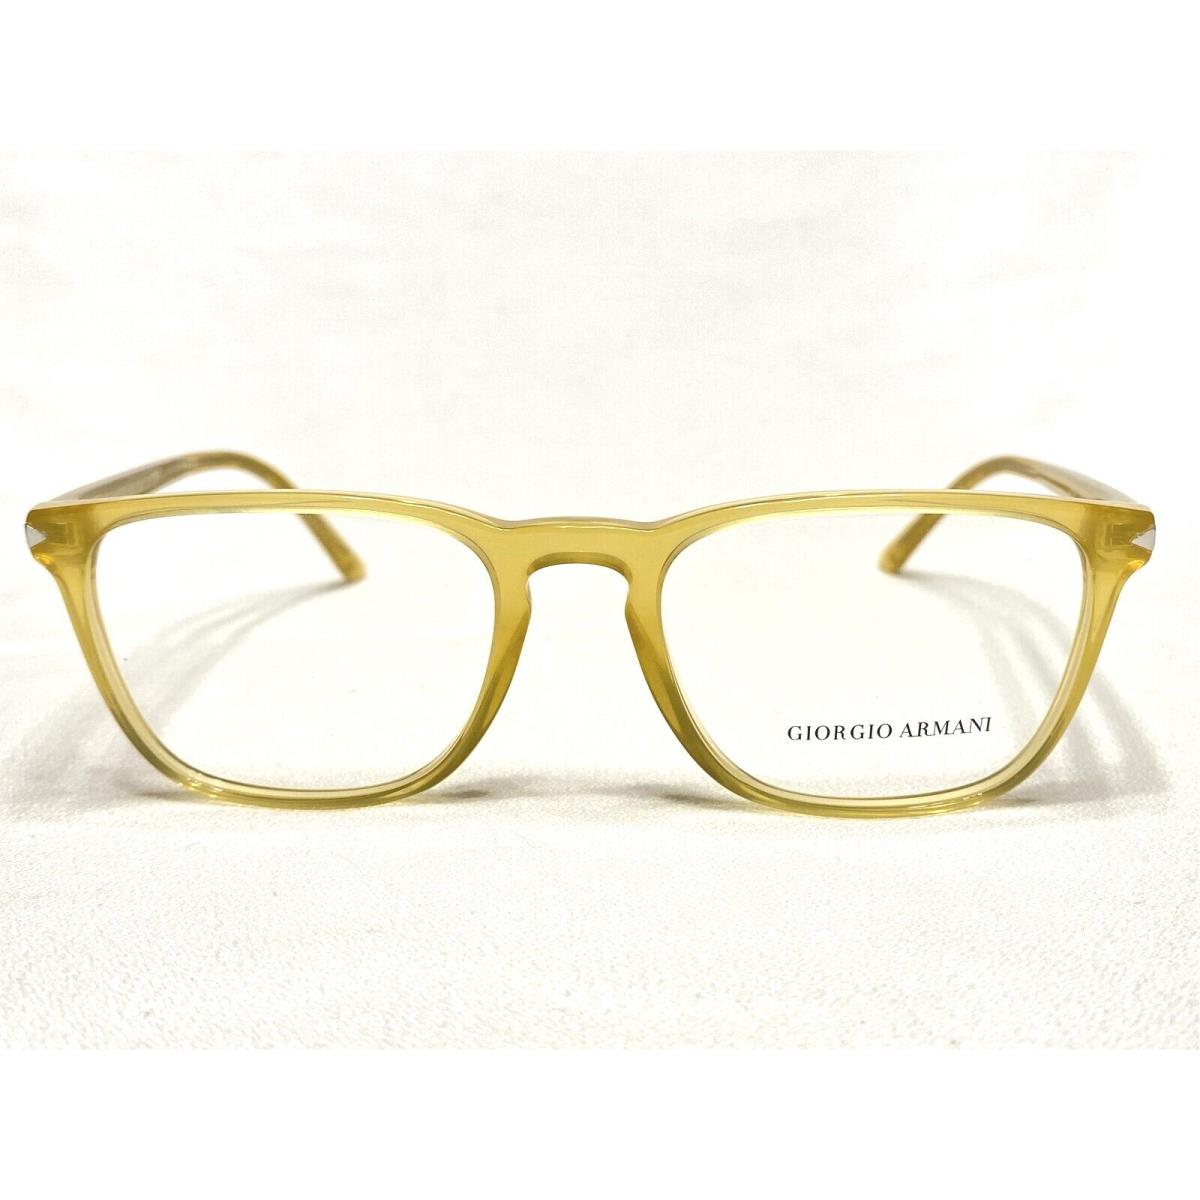 Giorgio Armani eyeglasses  - Translucent Yellow / Honey , Honey Frame, 5027 Manufacturer 0